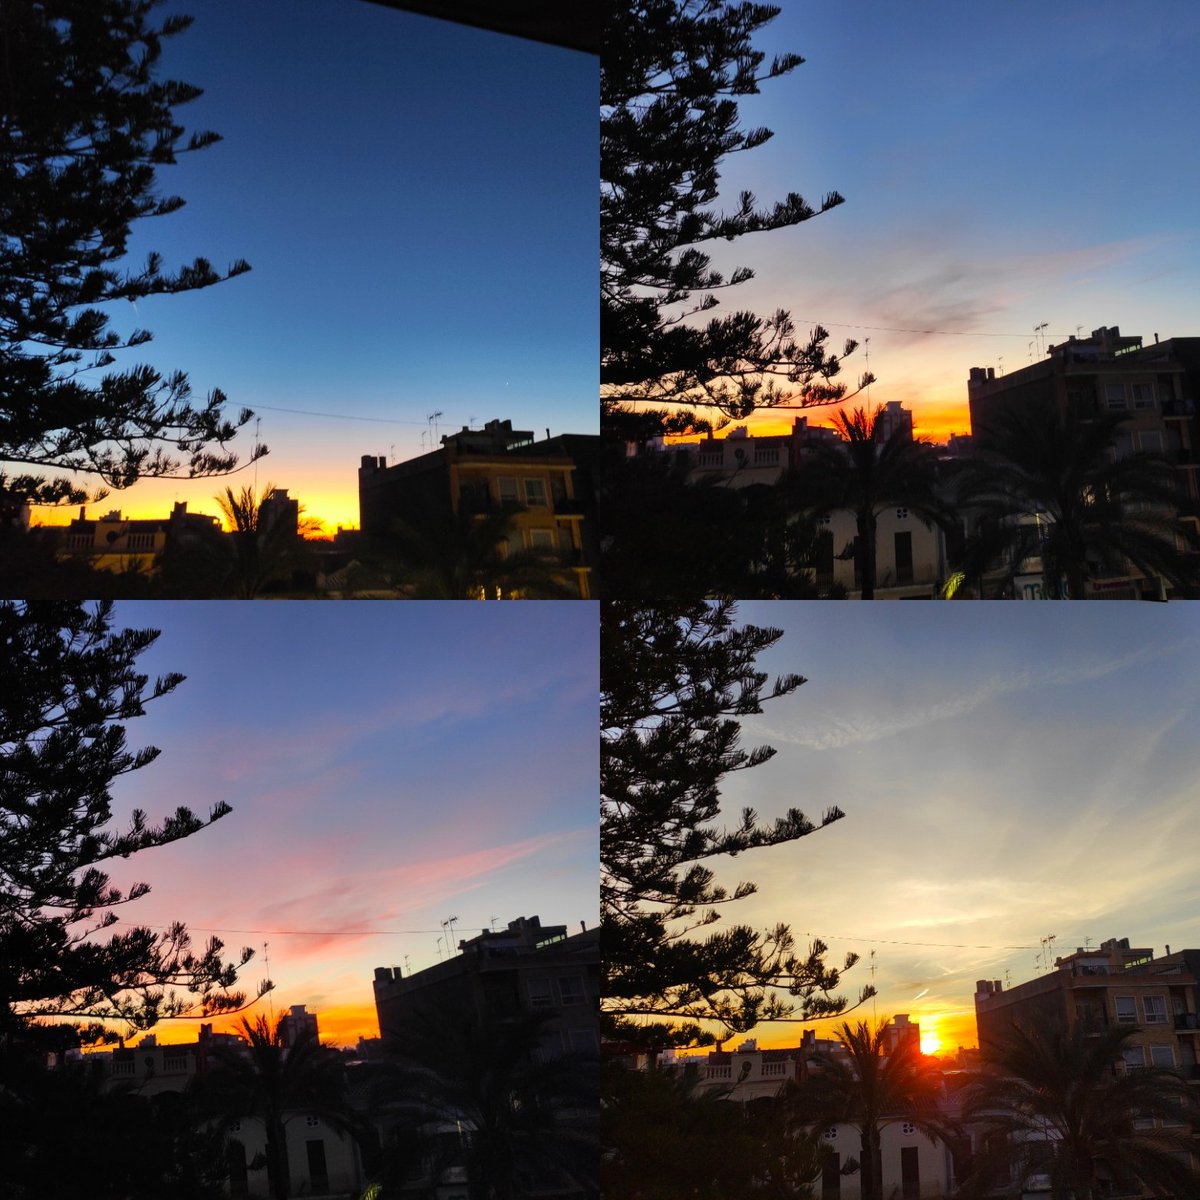 Bon día desde Catarroja #Valencia #26Ene #sunsetphotography 
#SinFiltros #NaturePhotography
#tiempoCV #PhotographyIsArt
#collagephoto #BuenosDias
@AEMET_CValencia @ElTiempoes @meteolivereta @oratgenet @SomosMeteo @Valencia_WX @Tiempo_Valencia @AEMET_Esp @avamet  @1967fct @esa_es